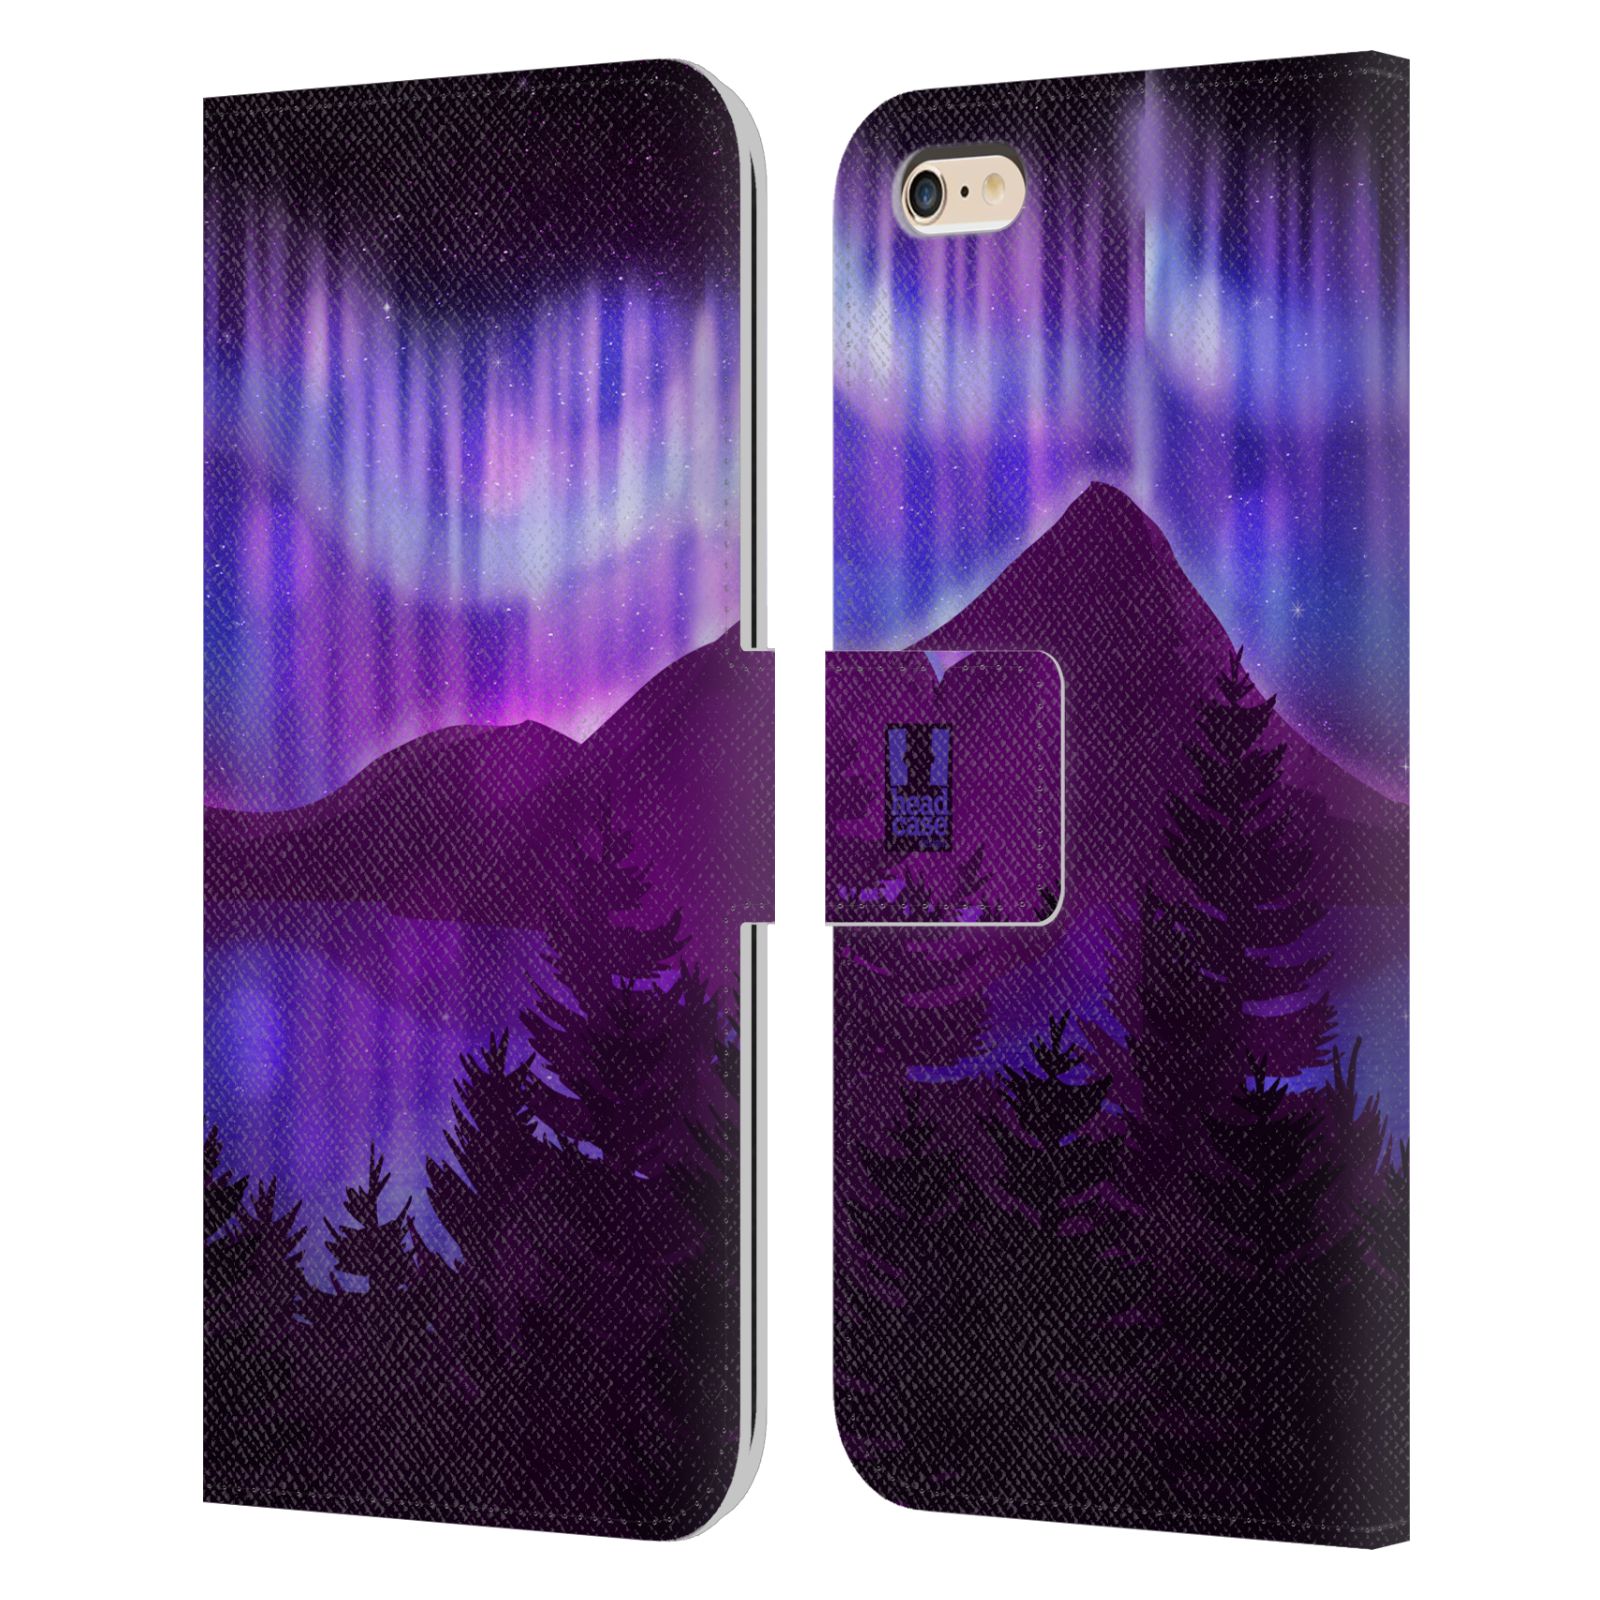 Pouzdro na mobil Apple Iphone 6 PLUS / 6S PLUS - HEAD CASE - Hory a lesy fialový odstín